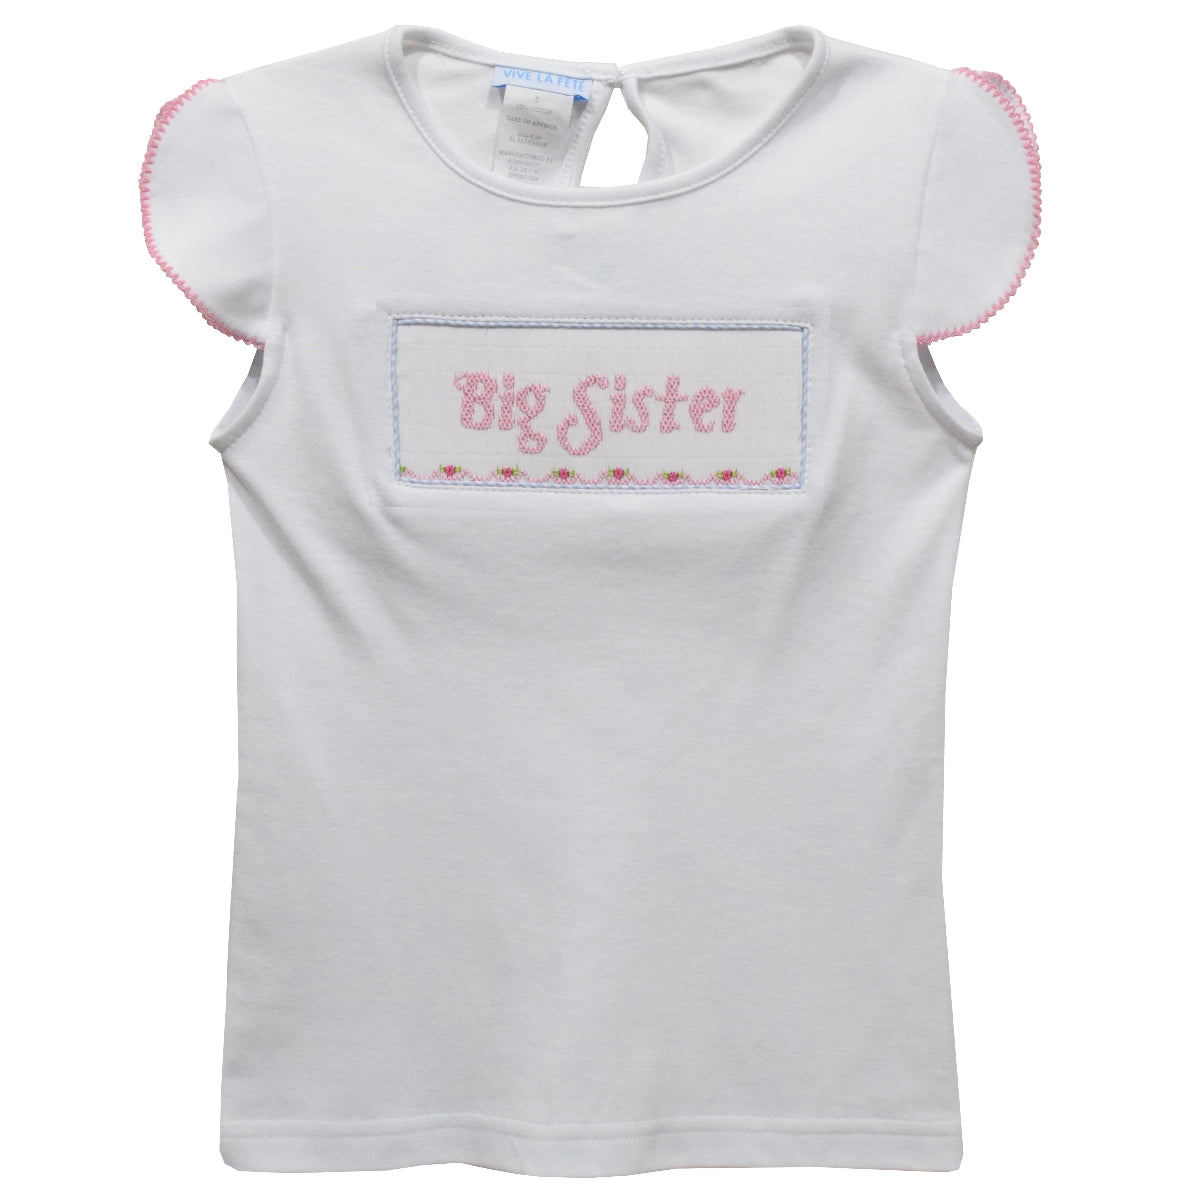 Vive La Fete: Big Sister Smocked White Knit Girls Top Cap Sleeve